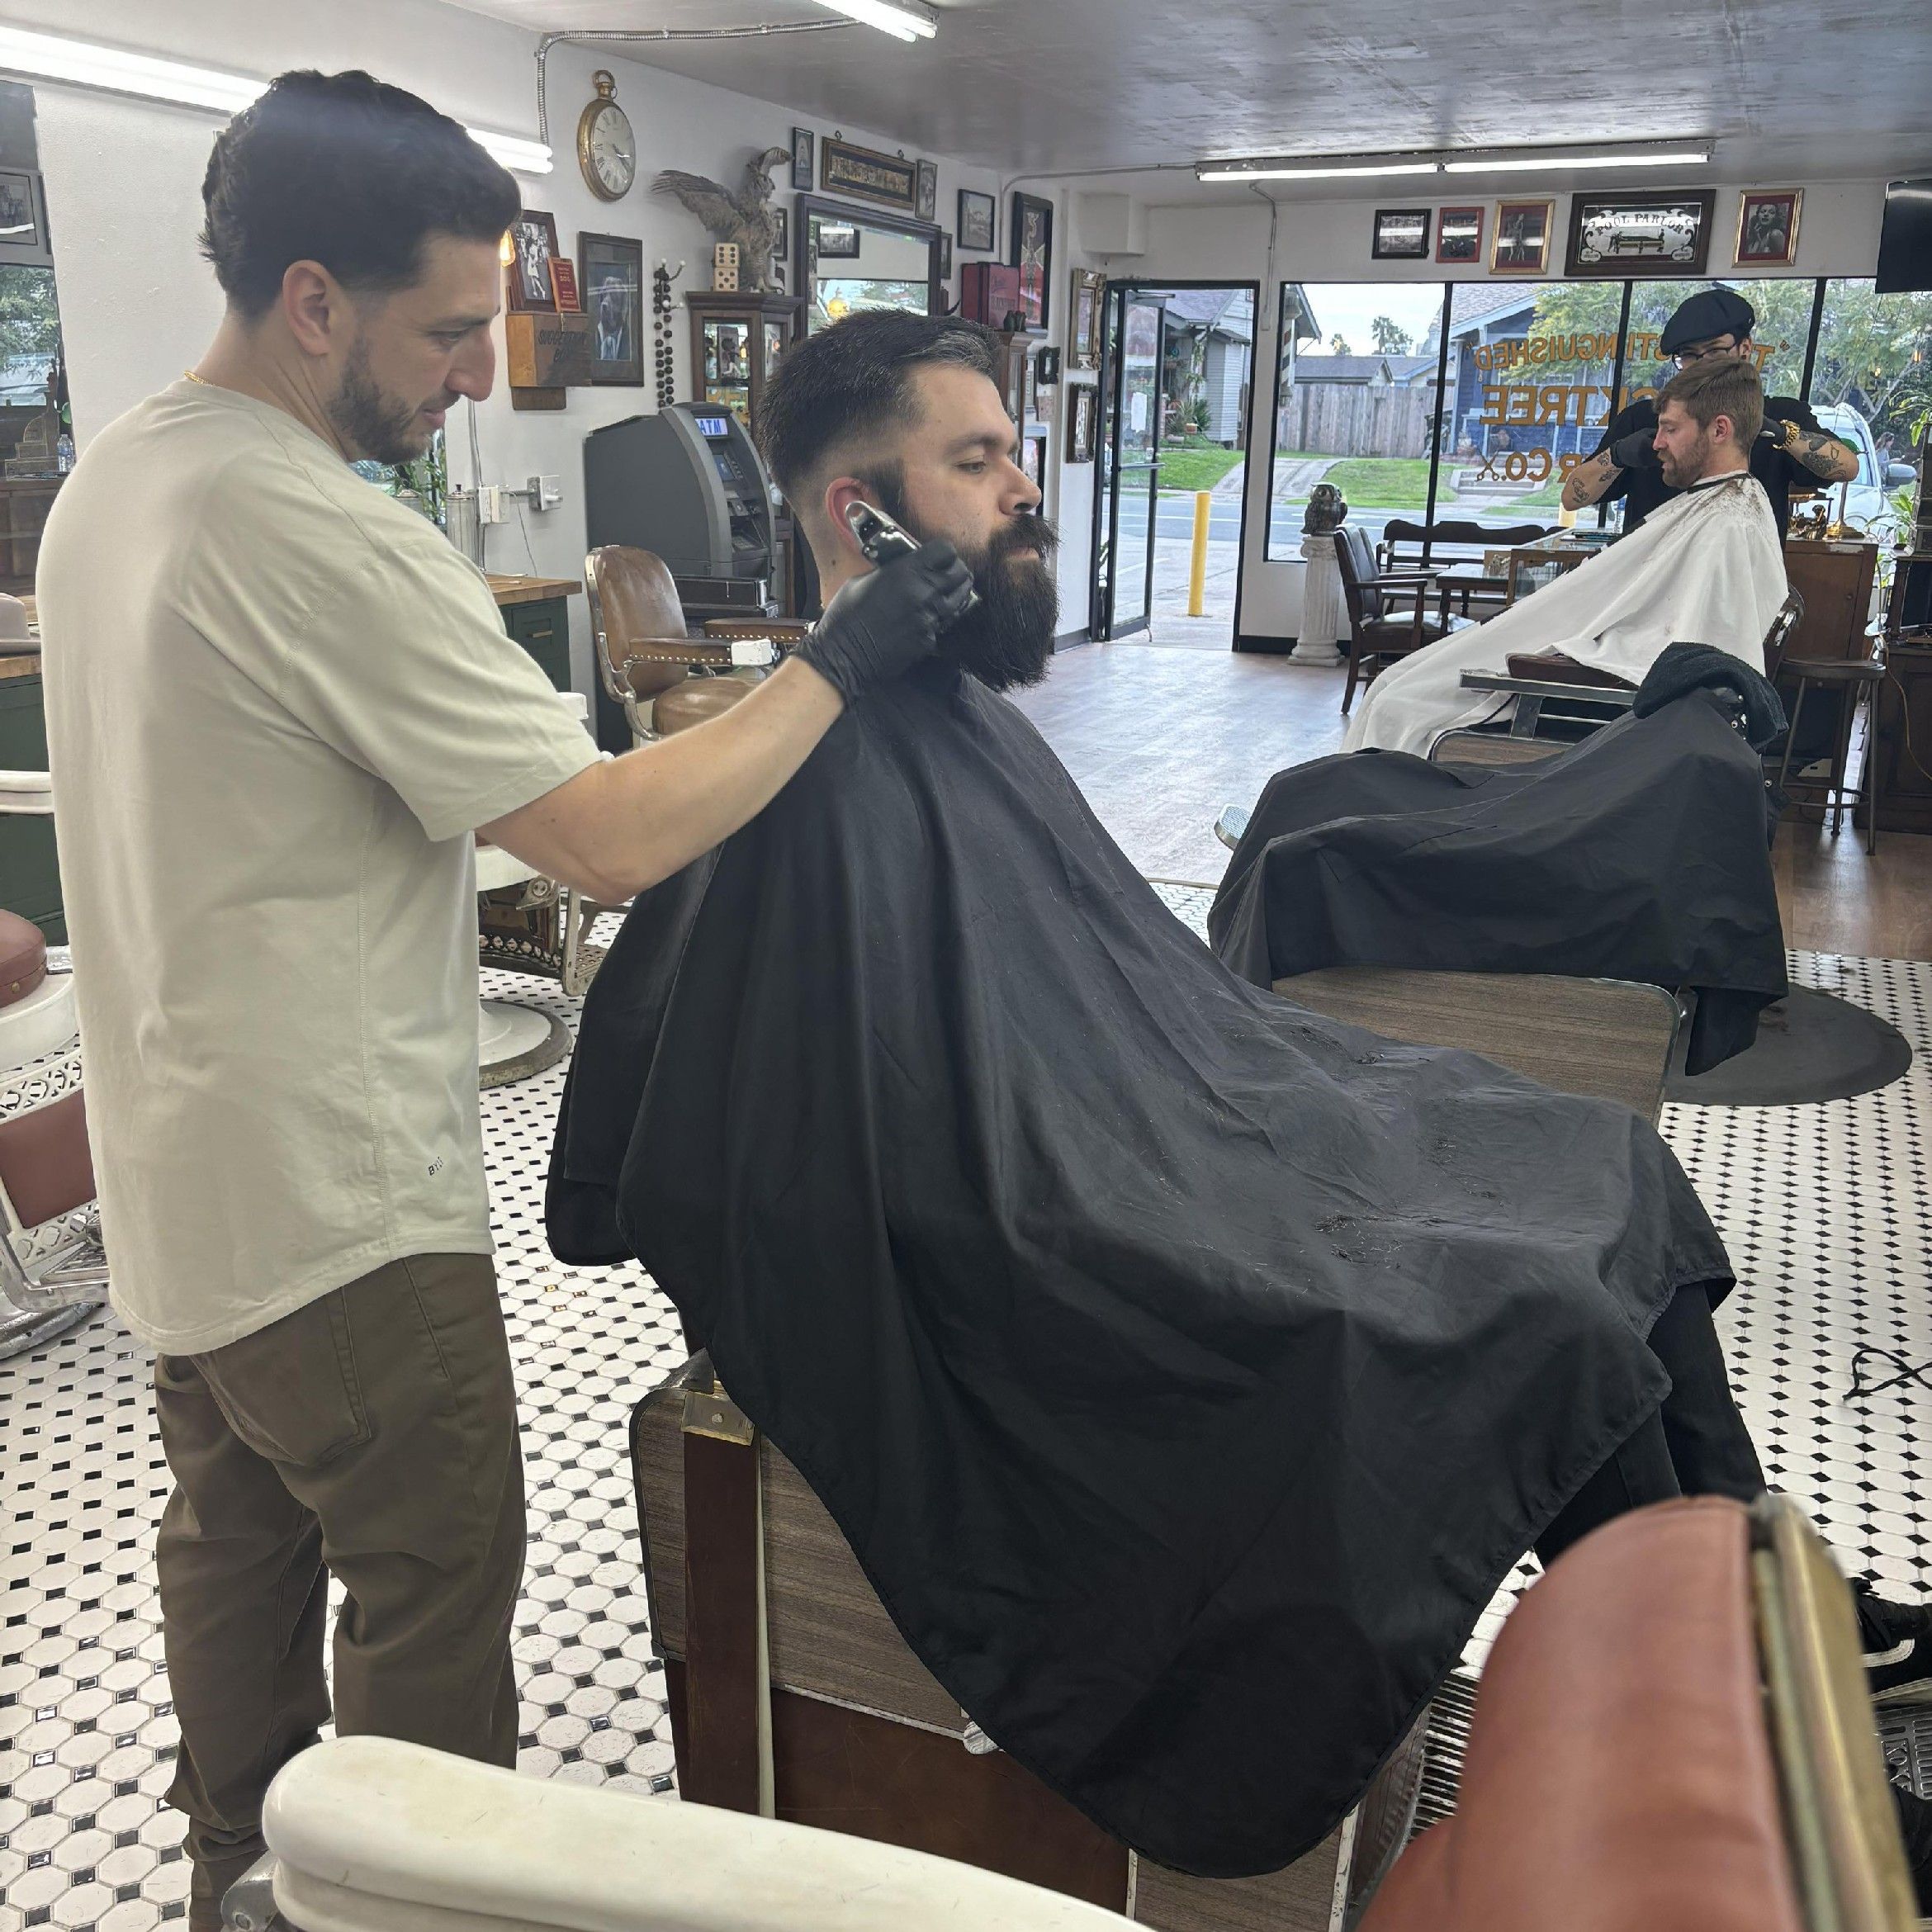 Haircut and shave portfolio